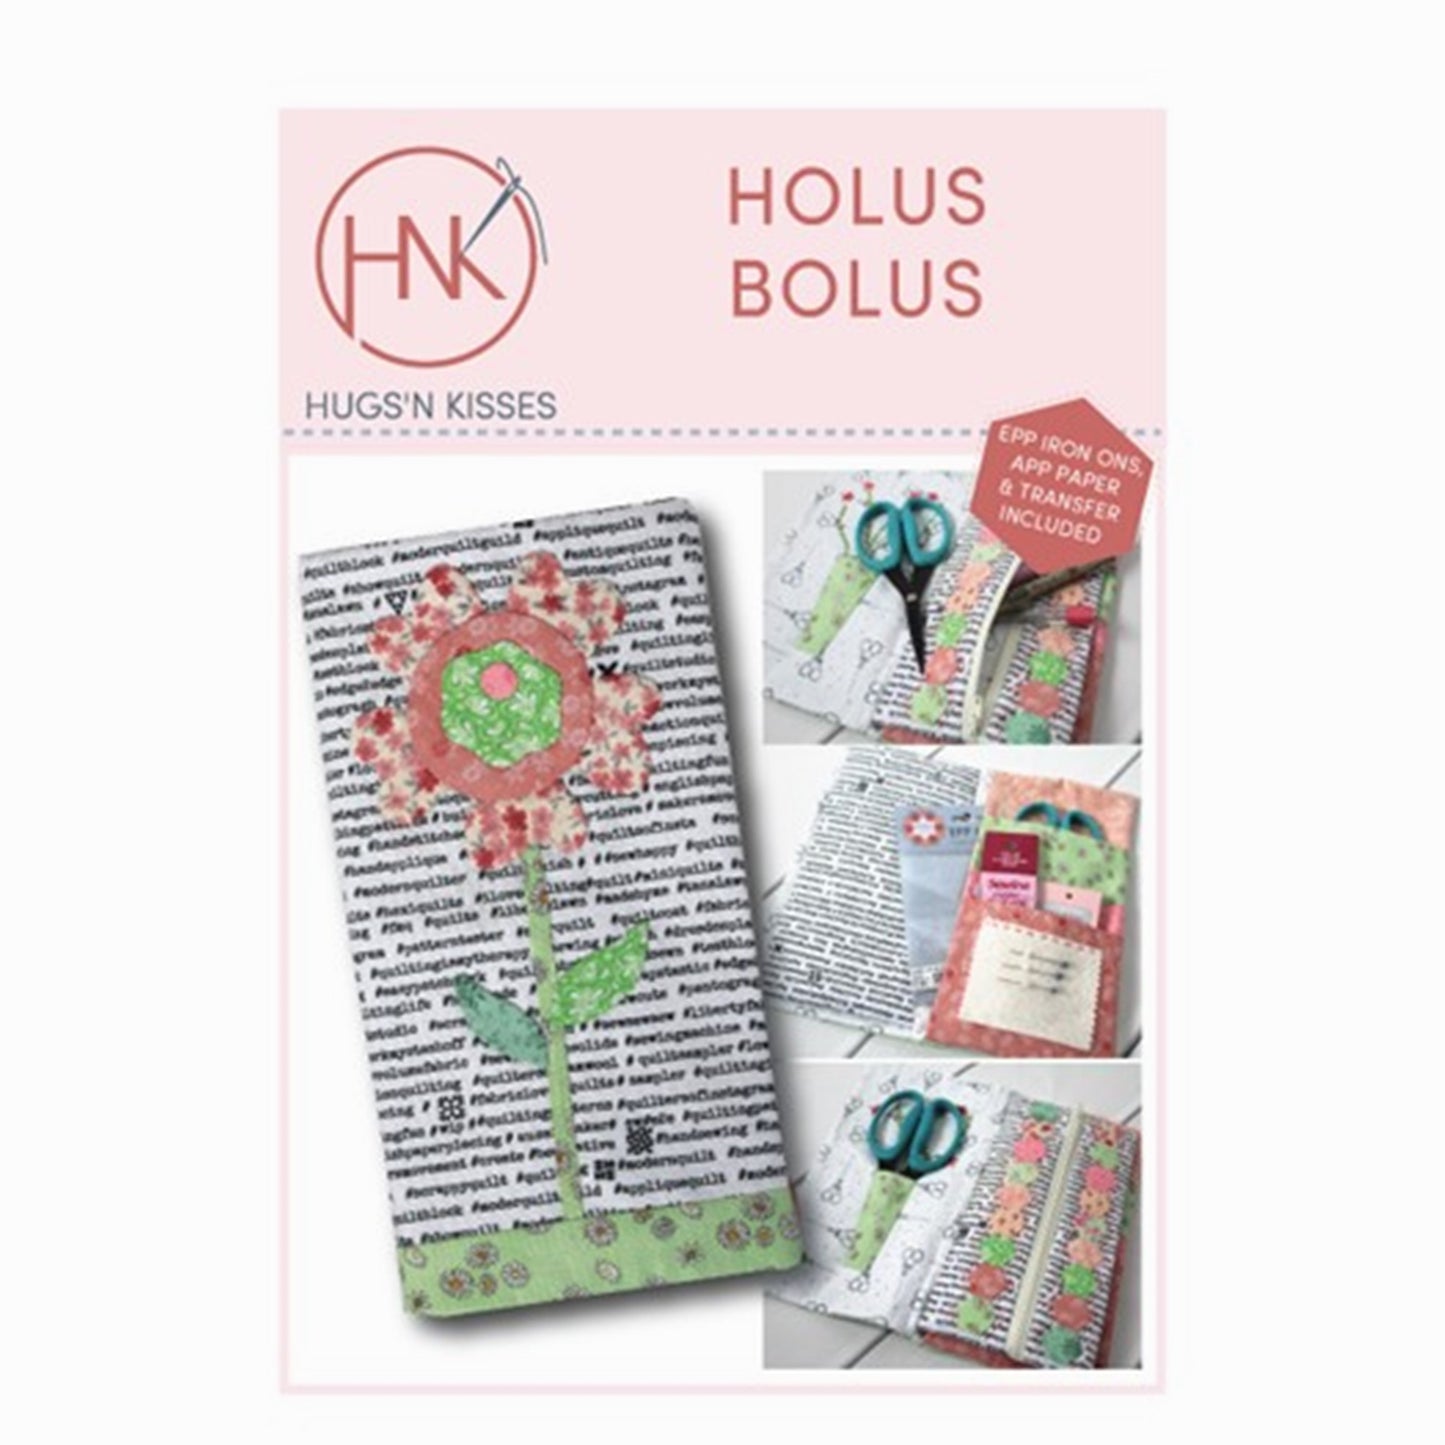 Holus Bolus zipper pouch sewing kit applique EPP embroidery Hugs 'N Kisses pattern